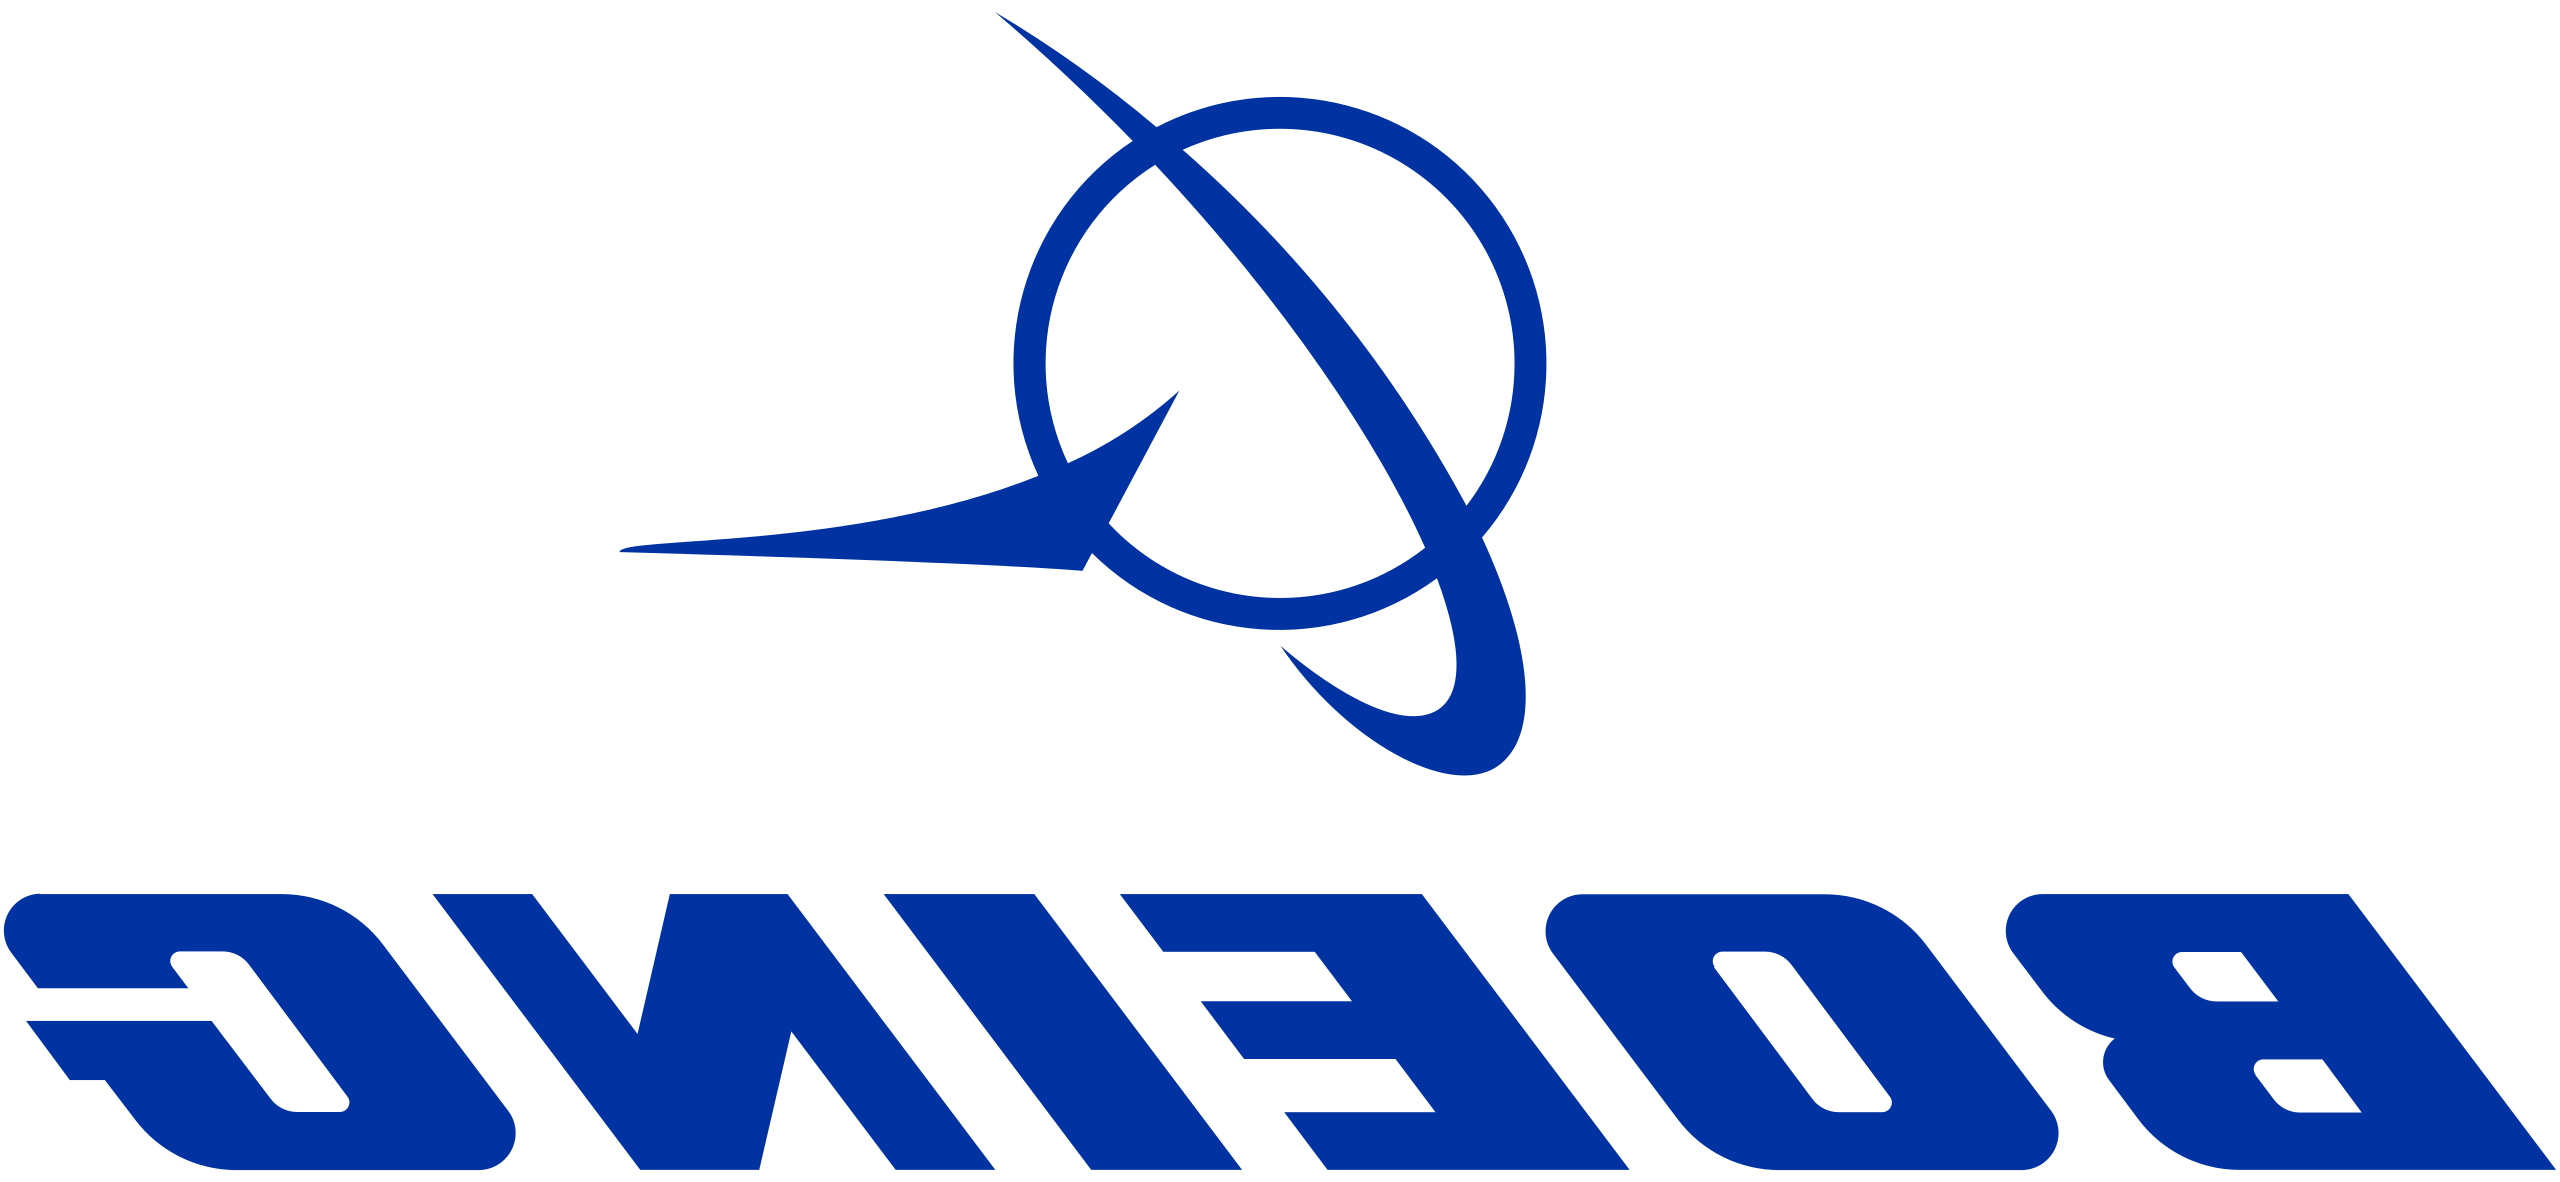 Boeing_full_logo_(变种).svg.png